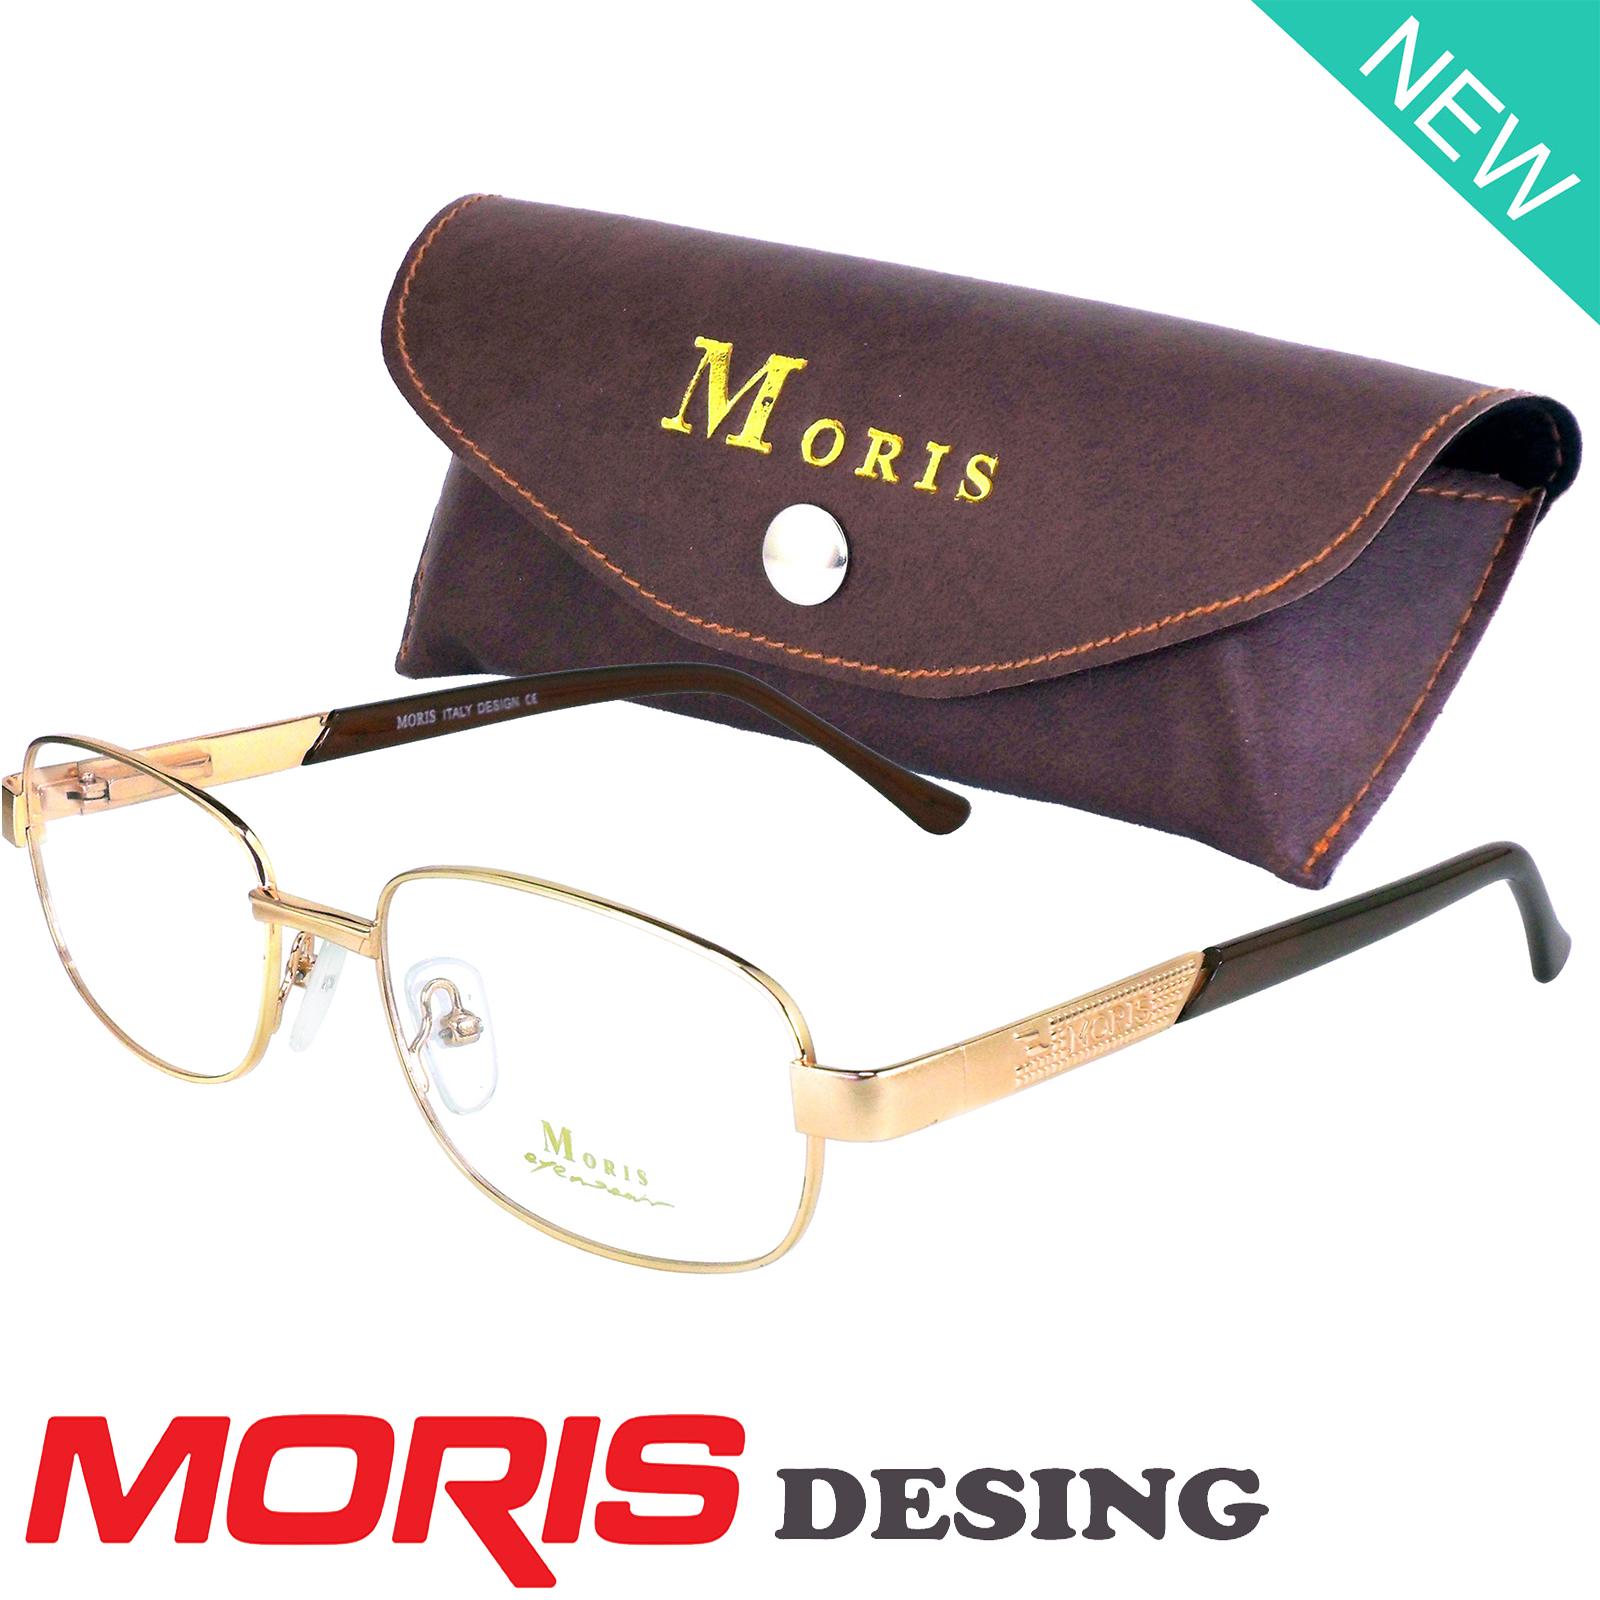 Moris แว่นตา รุ่น 2705 สีทอง กรอบเต็ม Rectangle ทรงสี่เหลี่ยมผืนผ้า ขาสปริง วัสดุ สแตนเลส สตีล (สำหรับตัดเลนส์) กรอบแว่นตา สวมใส่สบาย น้ำหนักเบา Full frame Eyeglass Spring leg Stainless Steel material Eyewear Top Glasses